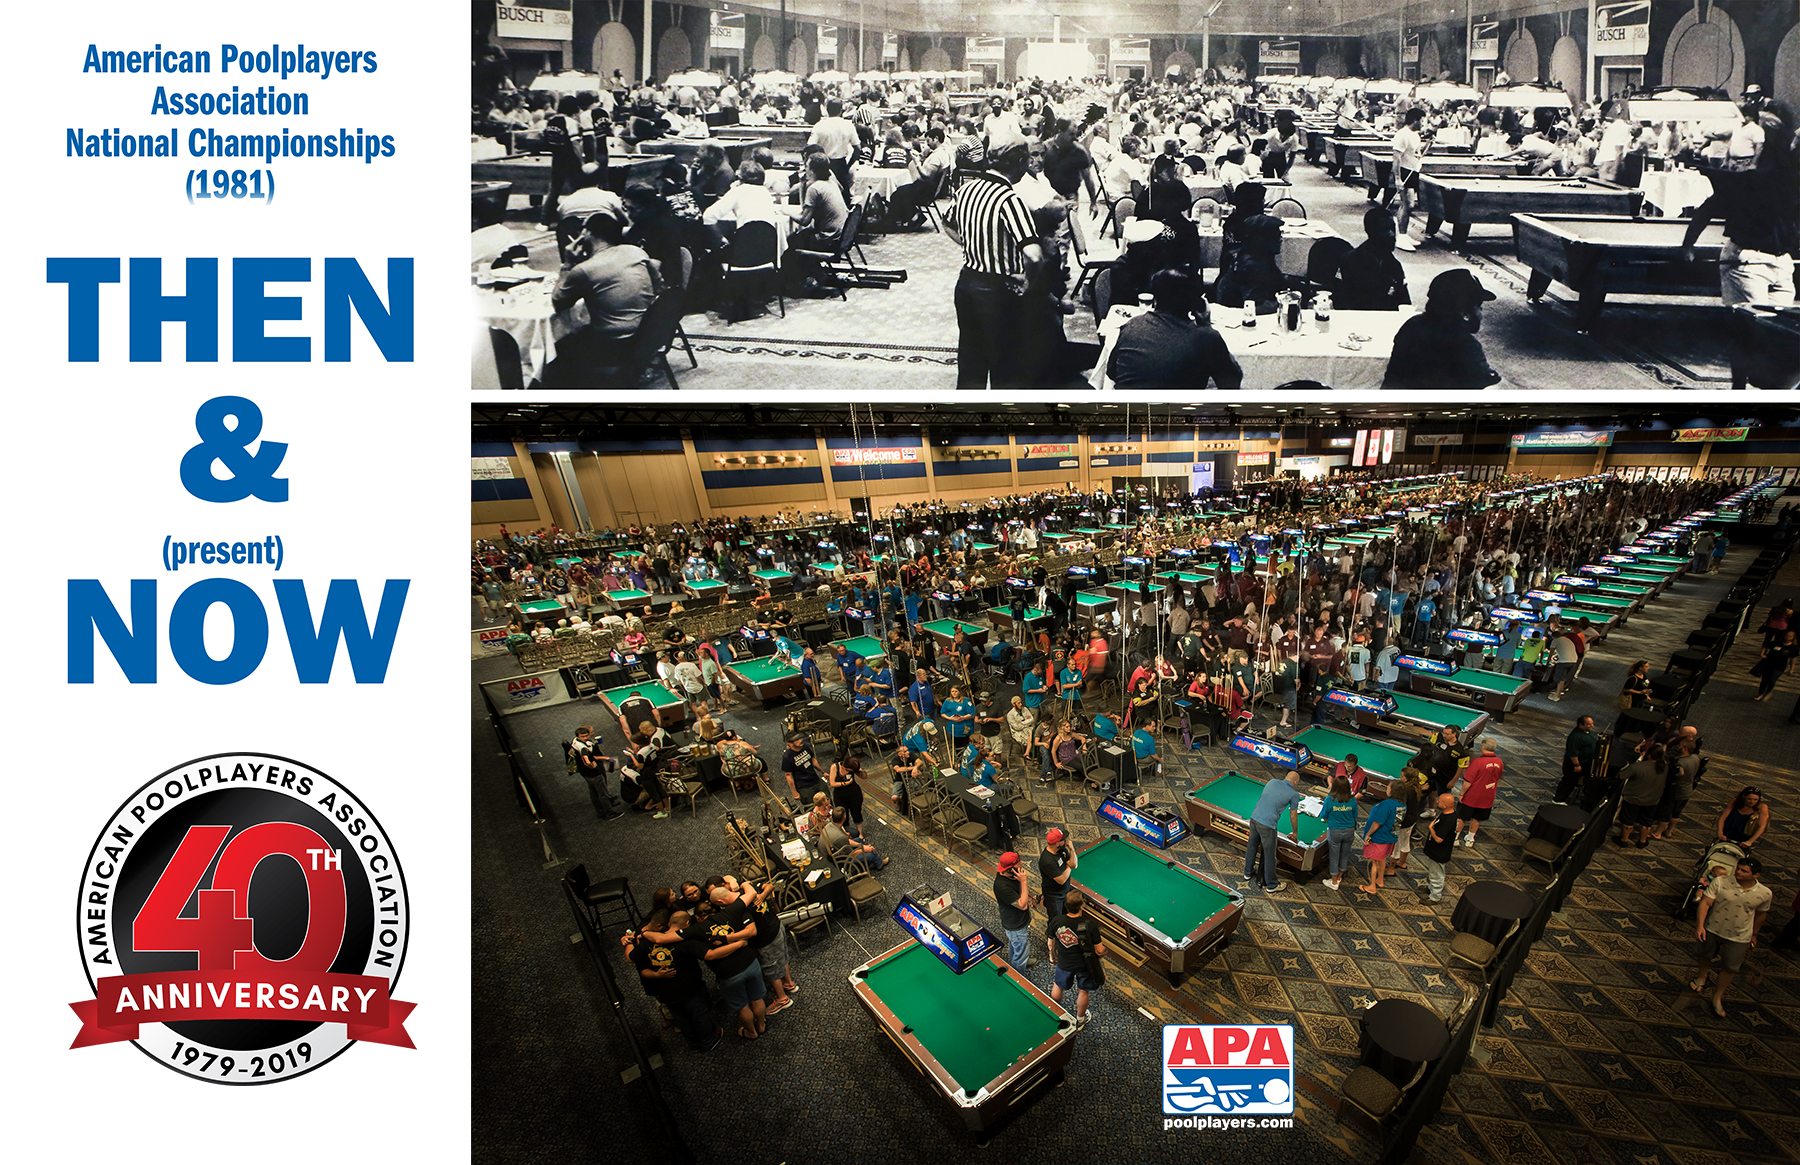 American Poolplayers Association - APA of North Alabama